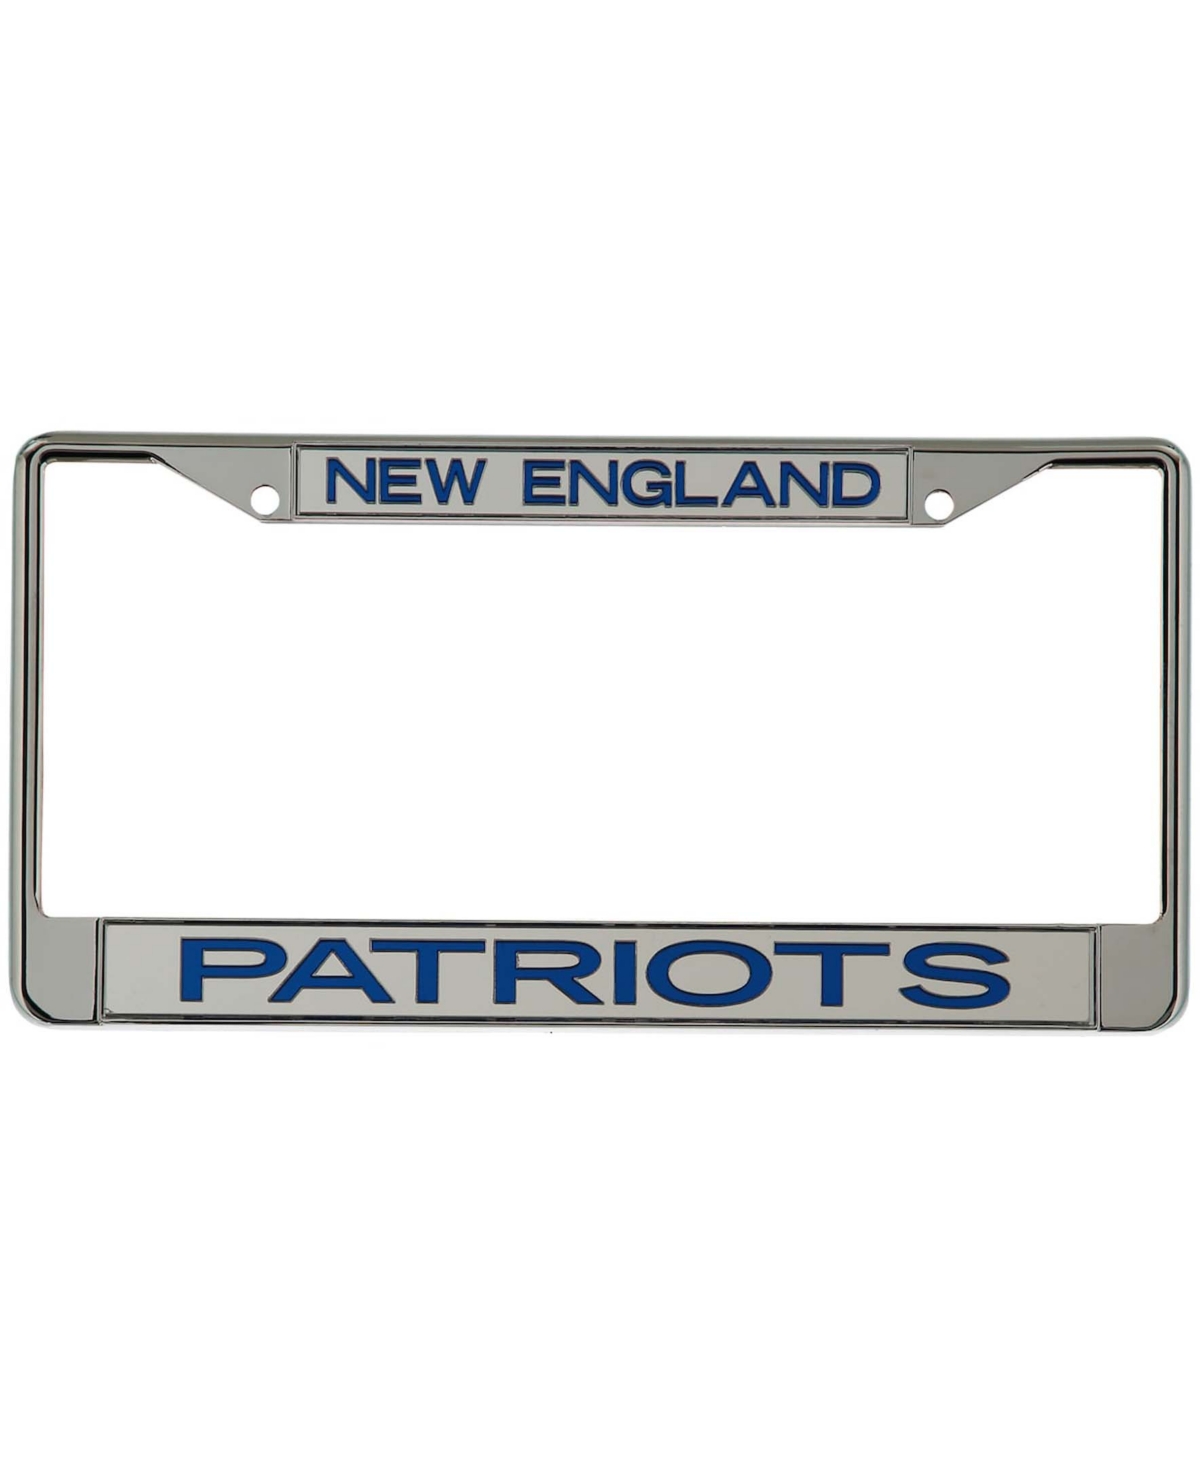 New England Patriots License Plate Frame - Multi